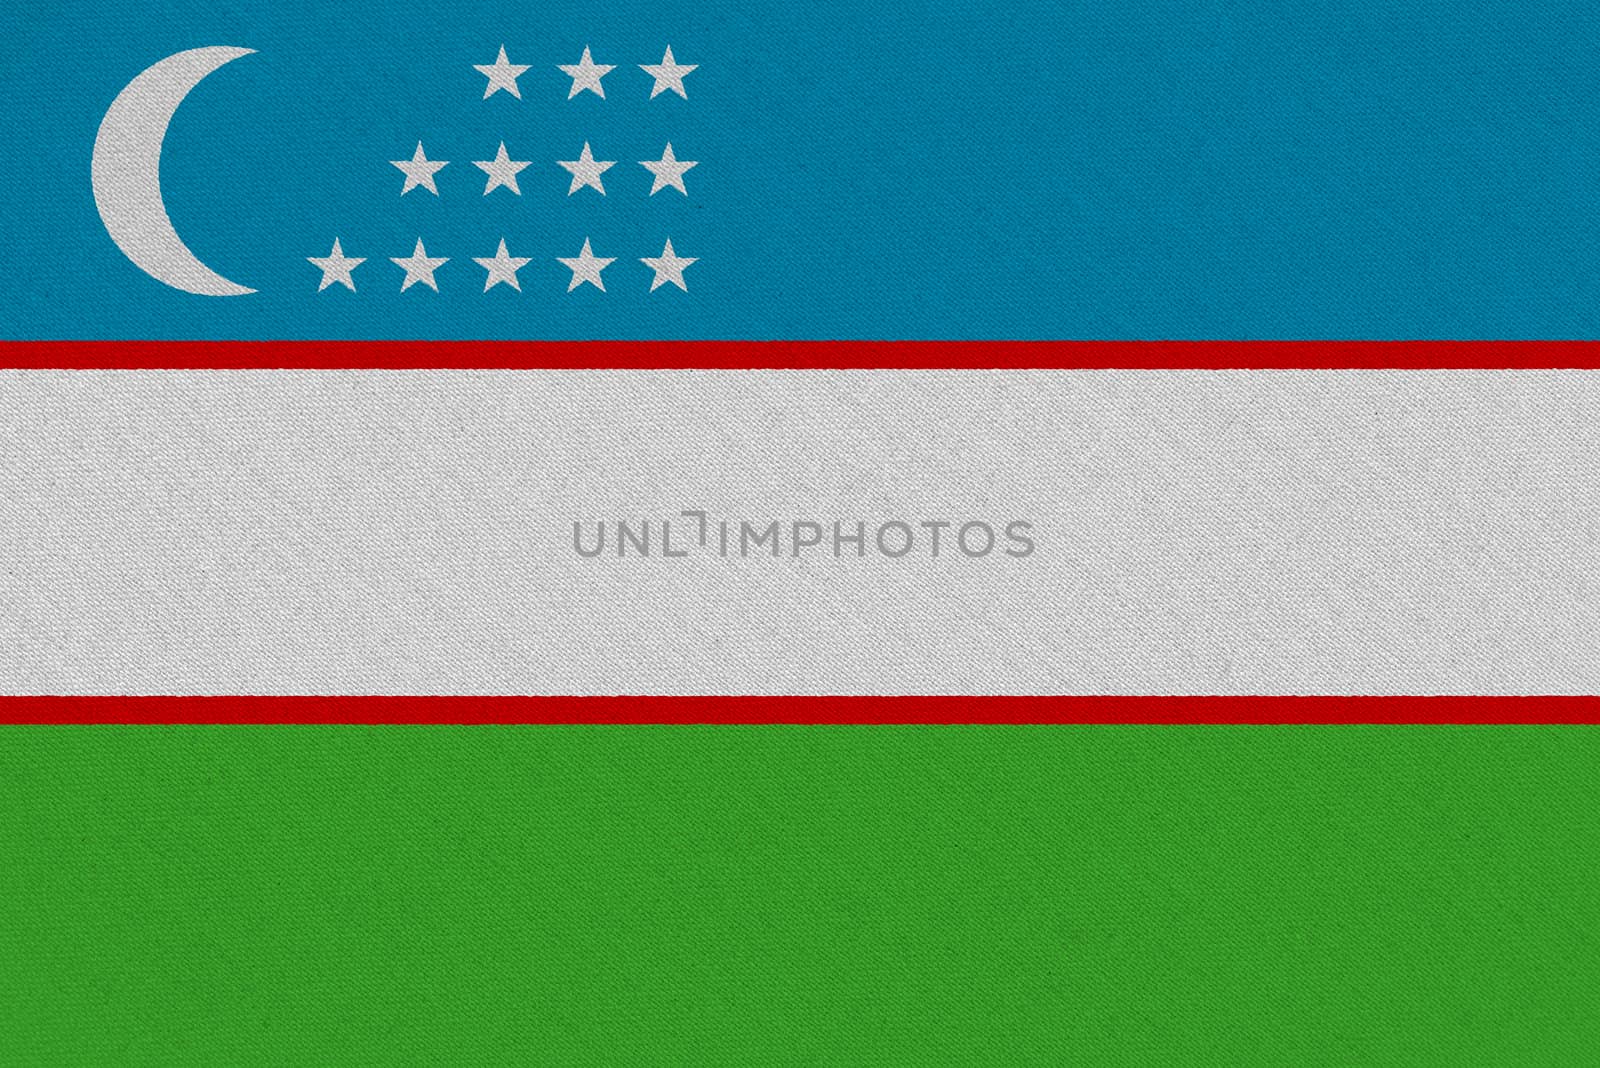 Uzbekistan fabric flag. Patriotic background. National flag of Uzbekistan